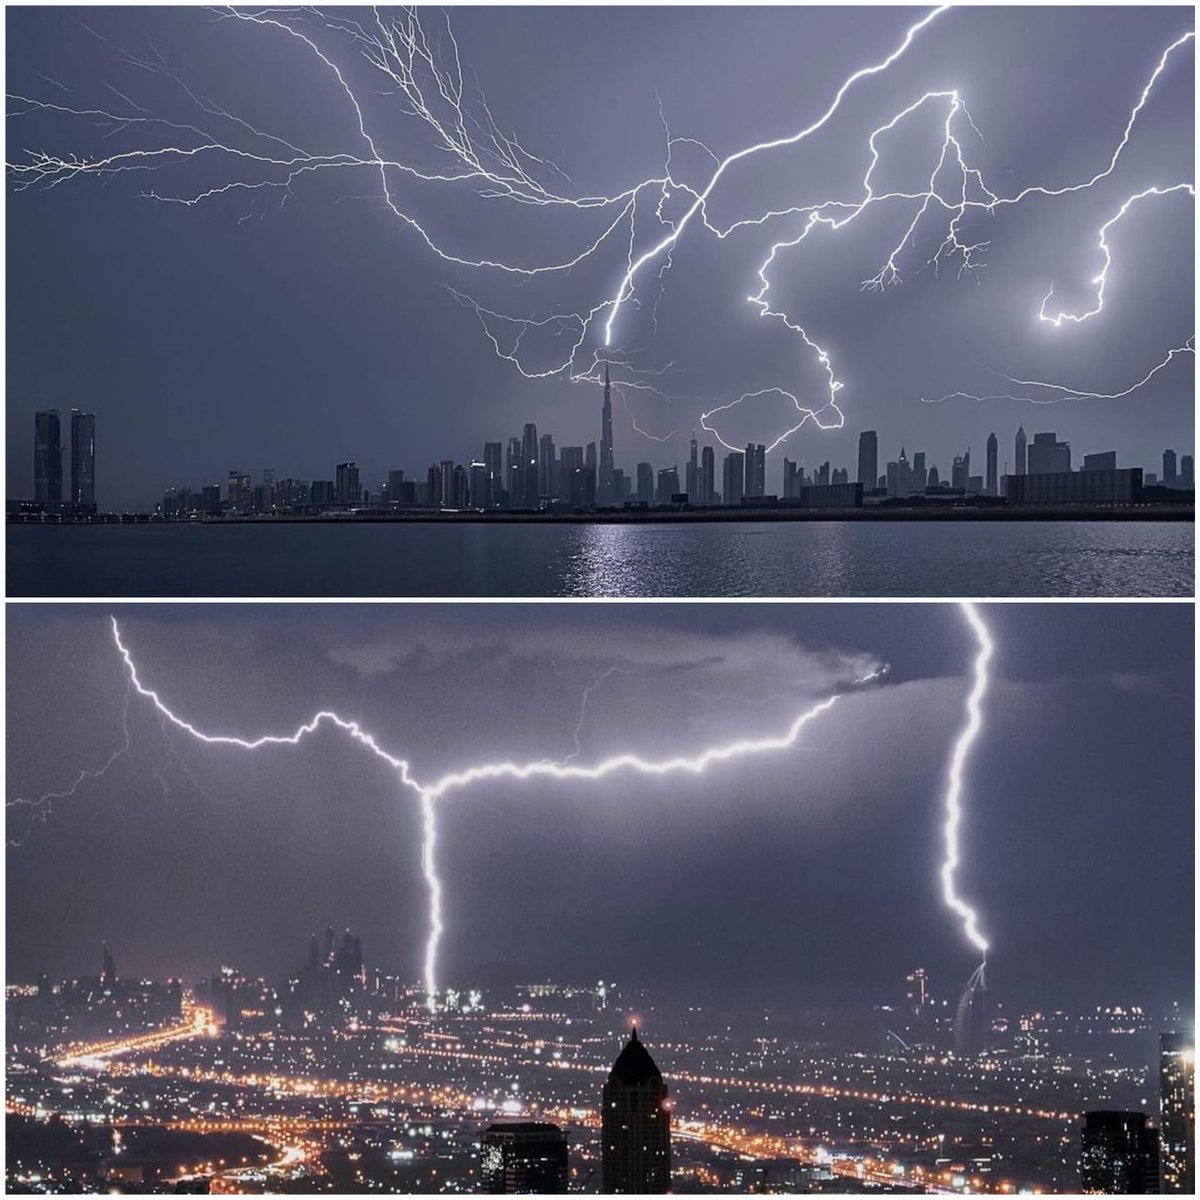 Scenes of lightning in Dubai yesterday's rain…..📷
#Rain
#dubailife
#flood
#StormDamage
#sky
#lighting
#viral
#instagram
#Twitter
#facebook
#whatsappstatus